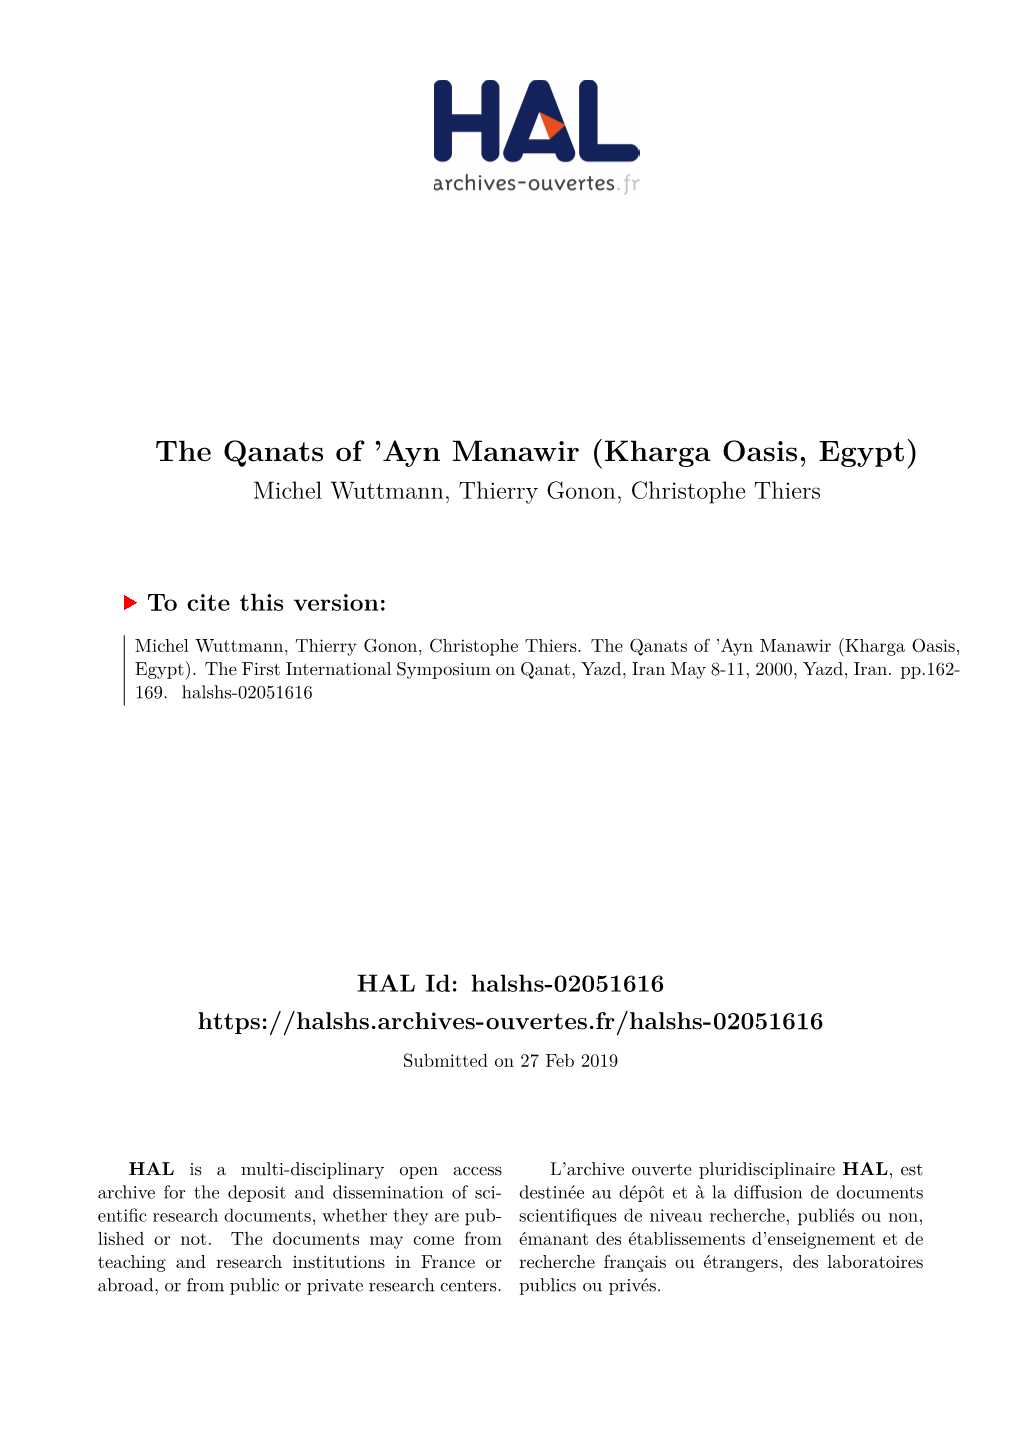 The Qanats of 'Ayn Manawir (Kharga Oasis, Egypt)